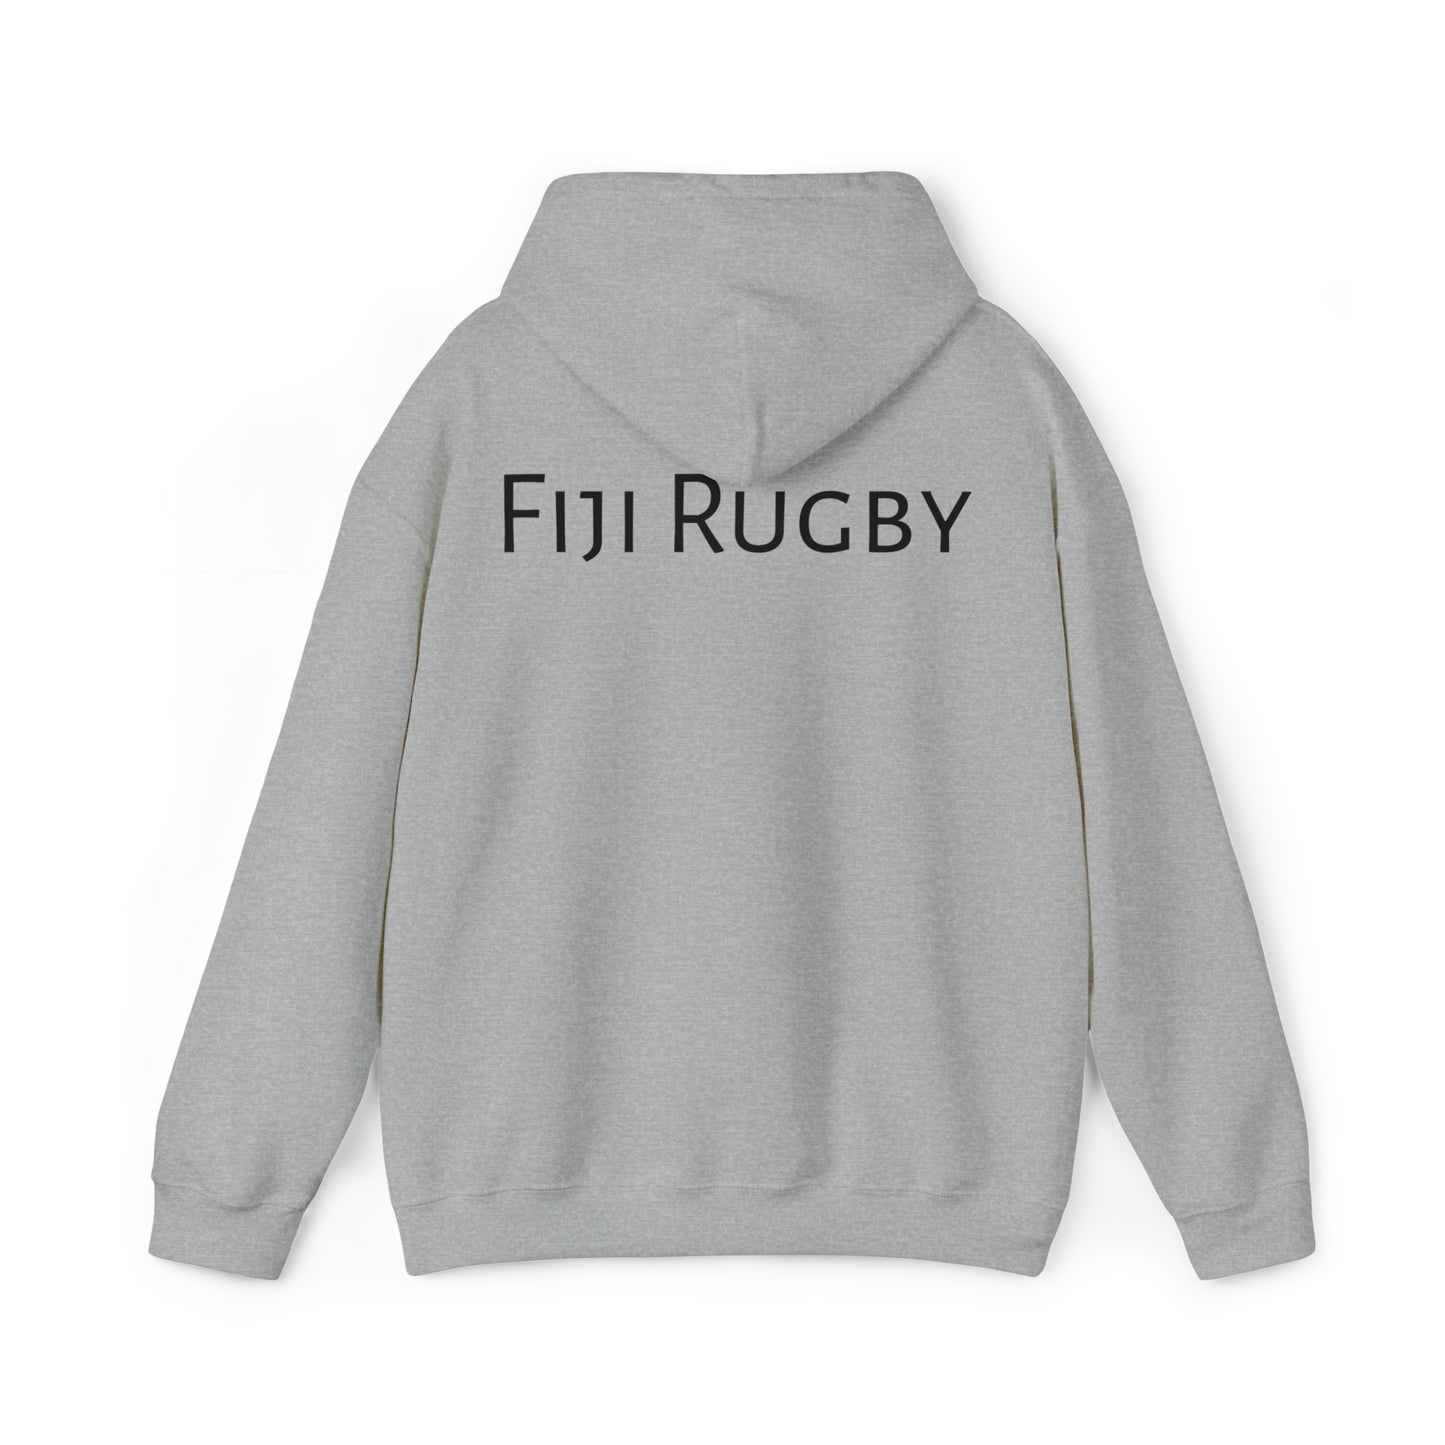 Happy Fiji - light hoodies